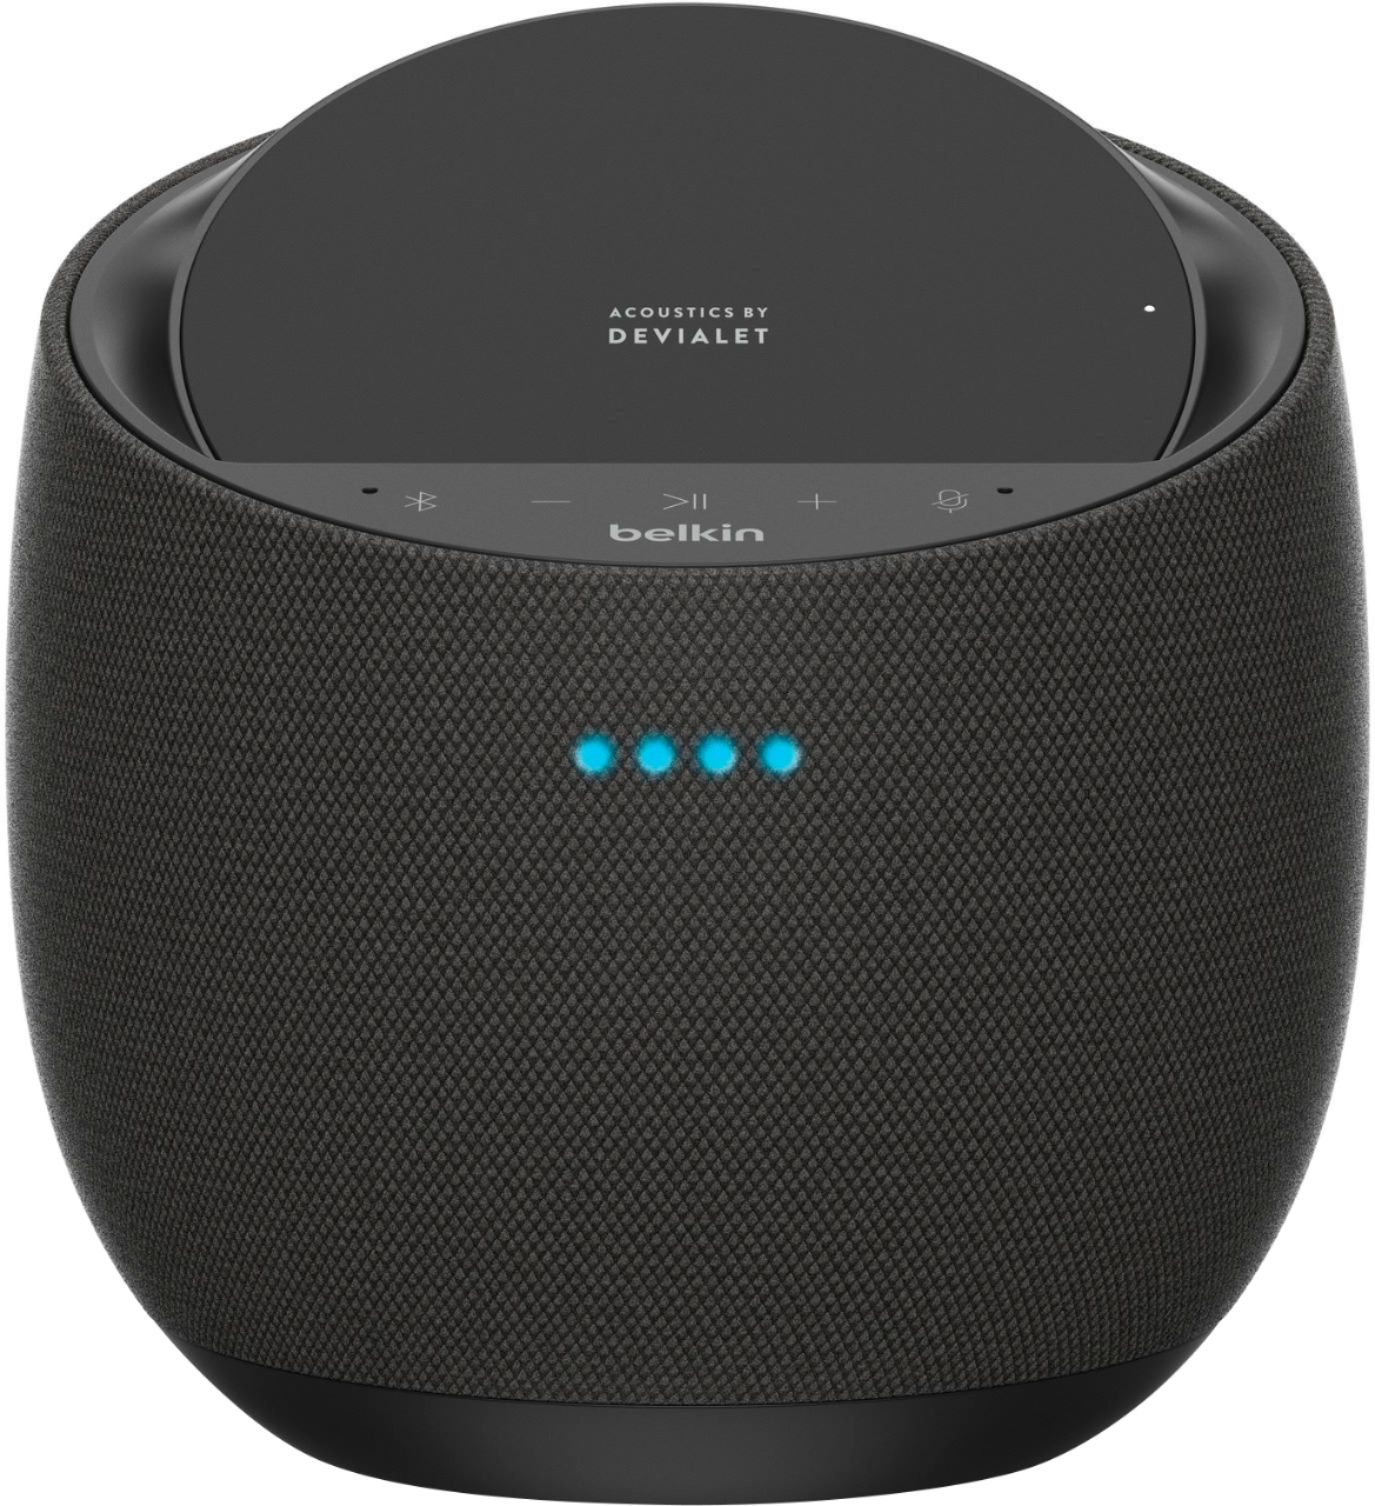 Belkin SoundForm Elite Hi-Fi Smart Speaker + Wireless Charger with Alexa, Airplay2 – Black – Just $89.99 at Best Buy